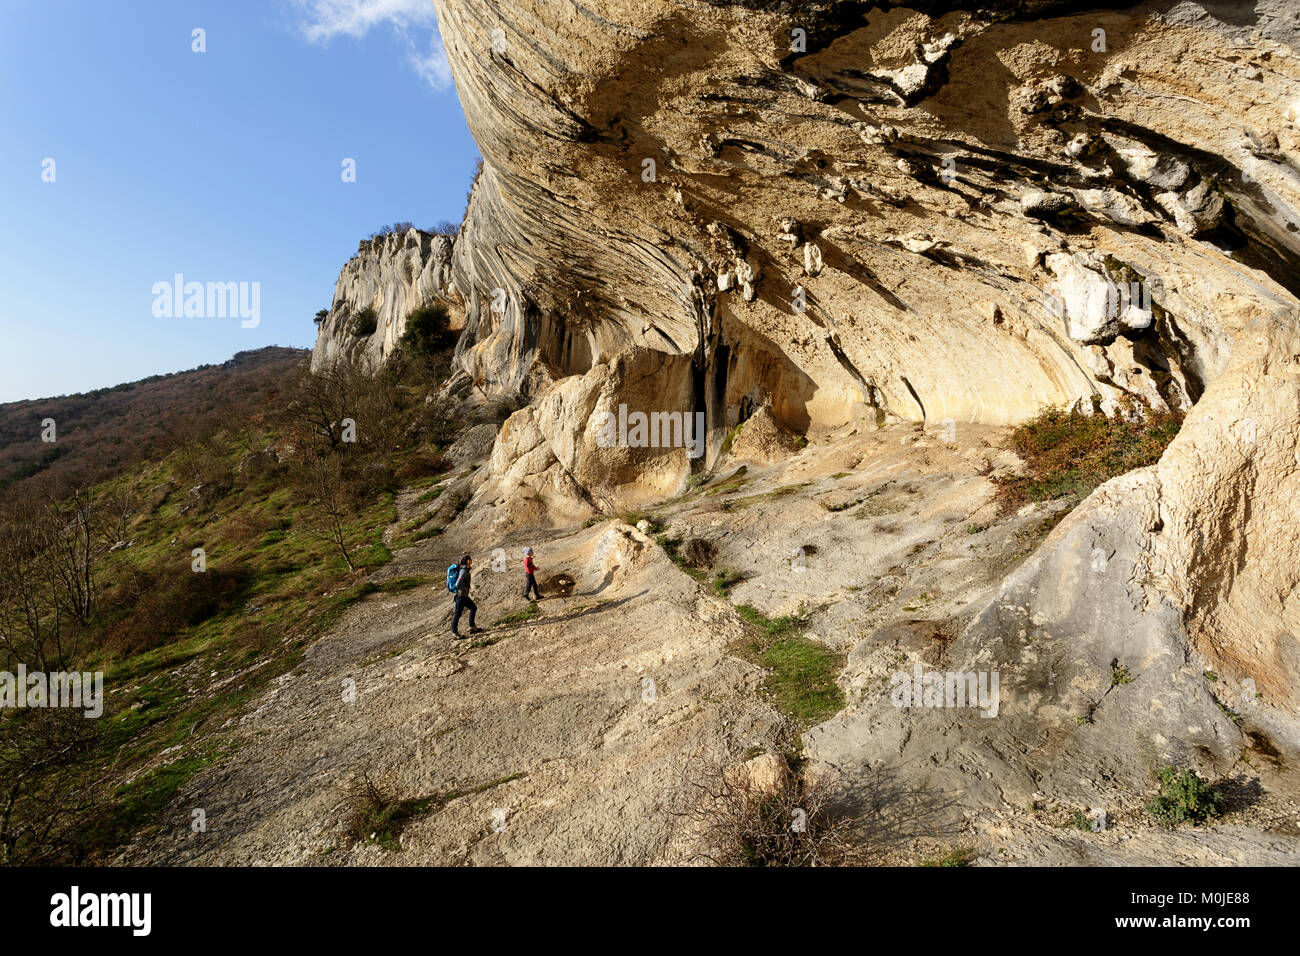 Mother and son under karst rock formations and cliffs at Veli badin, Socerga, Slovenia. Stock Photo